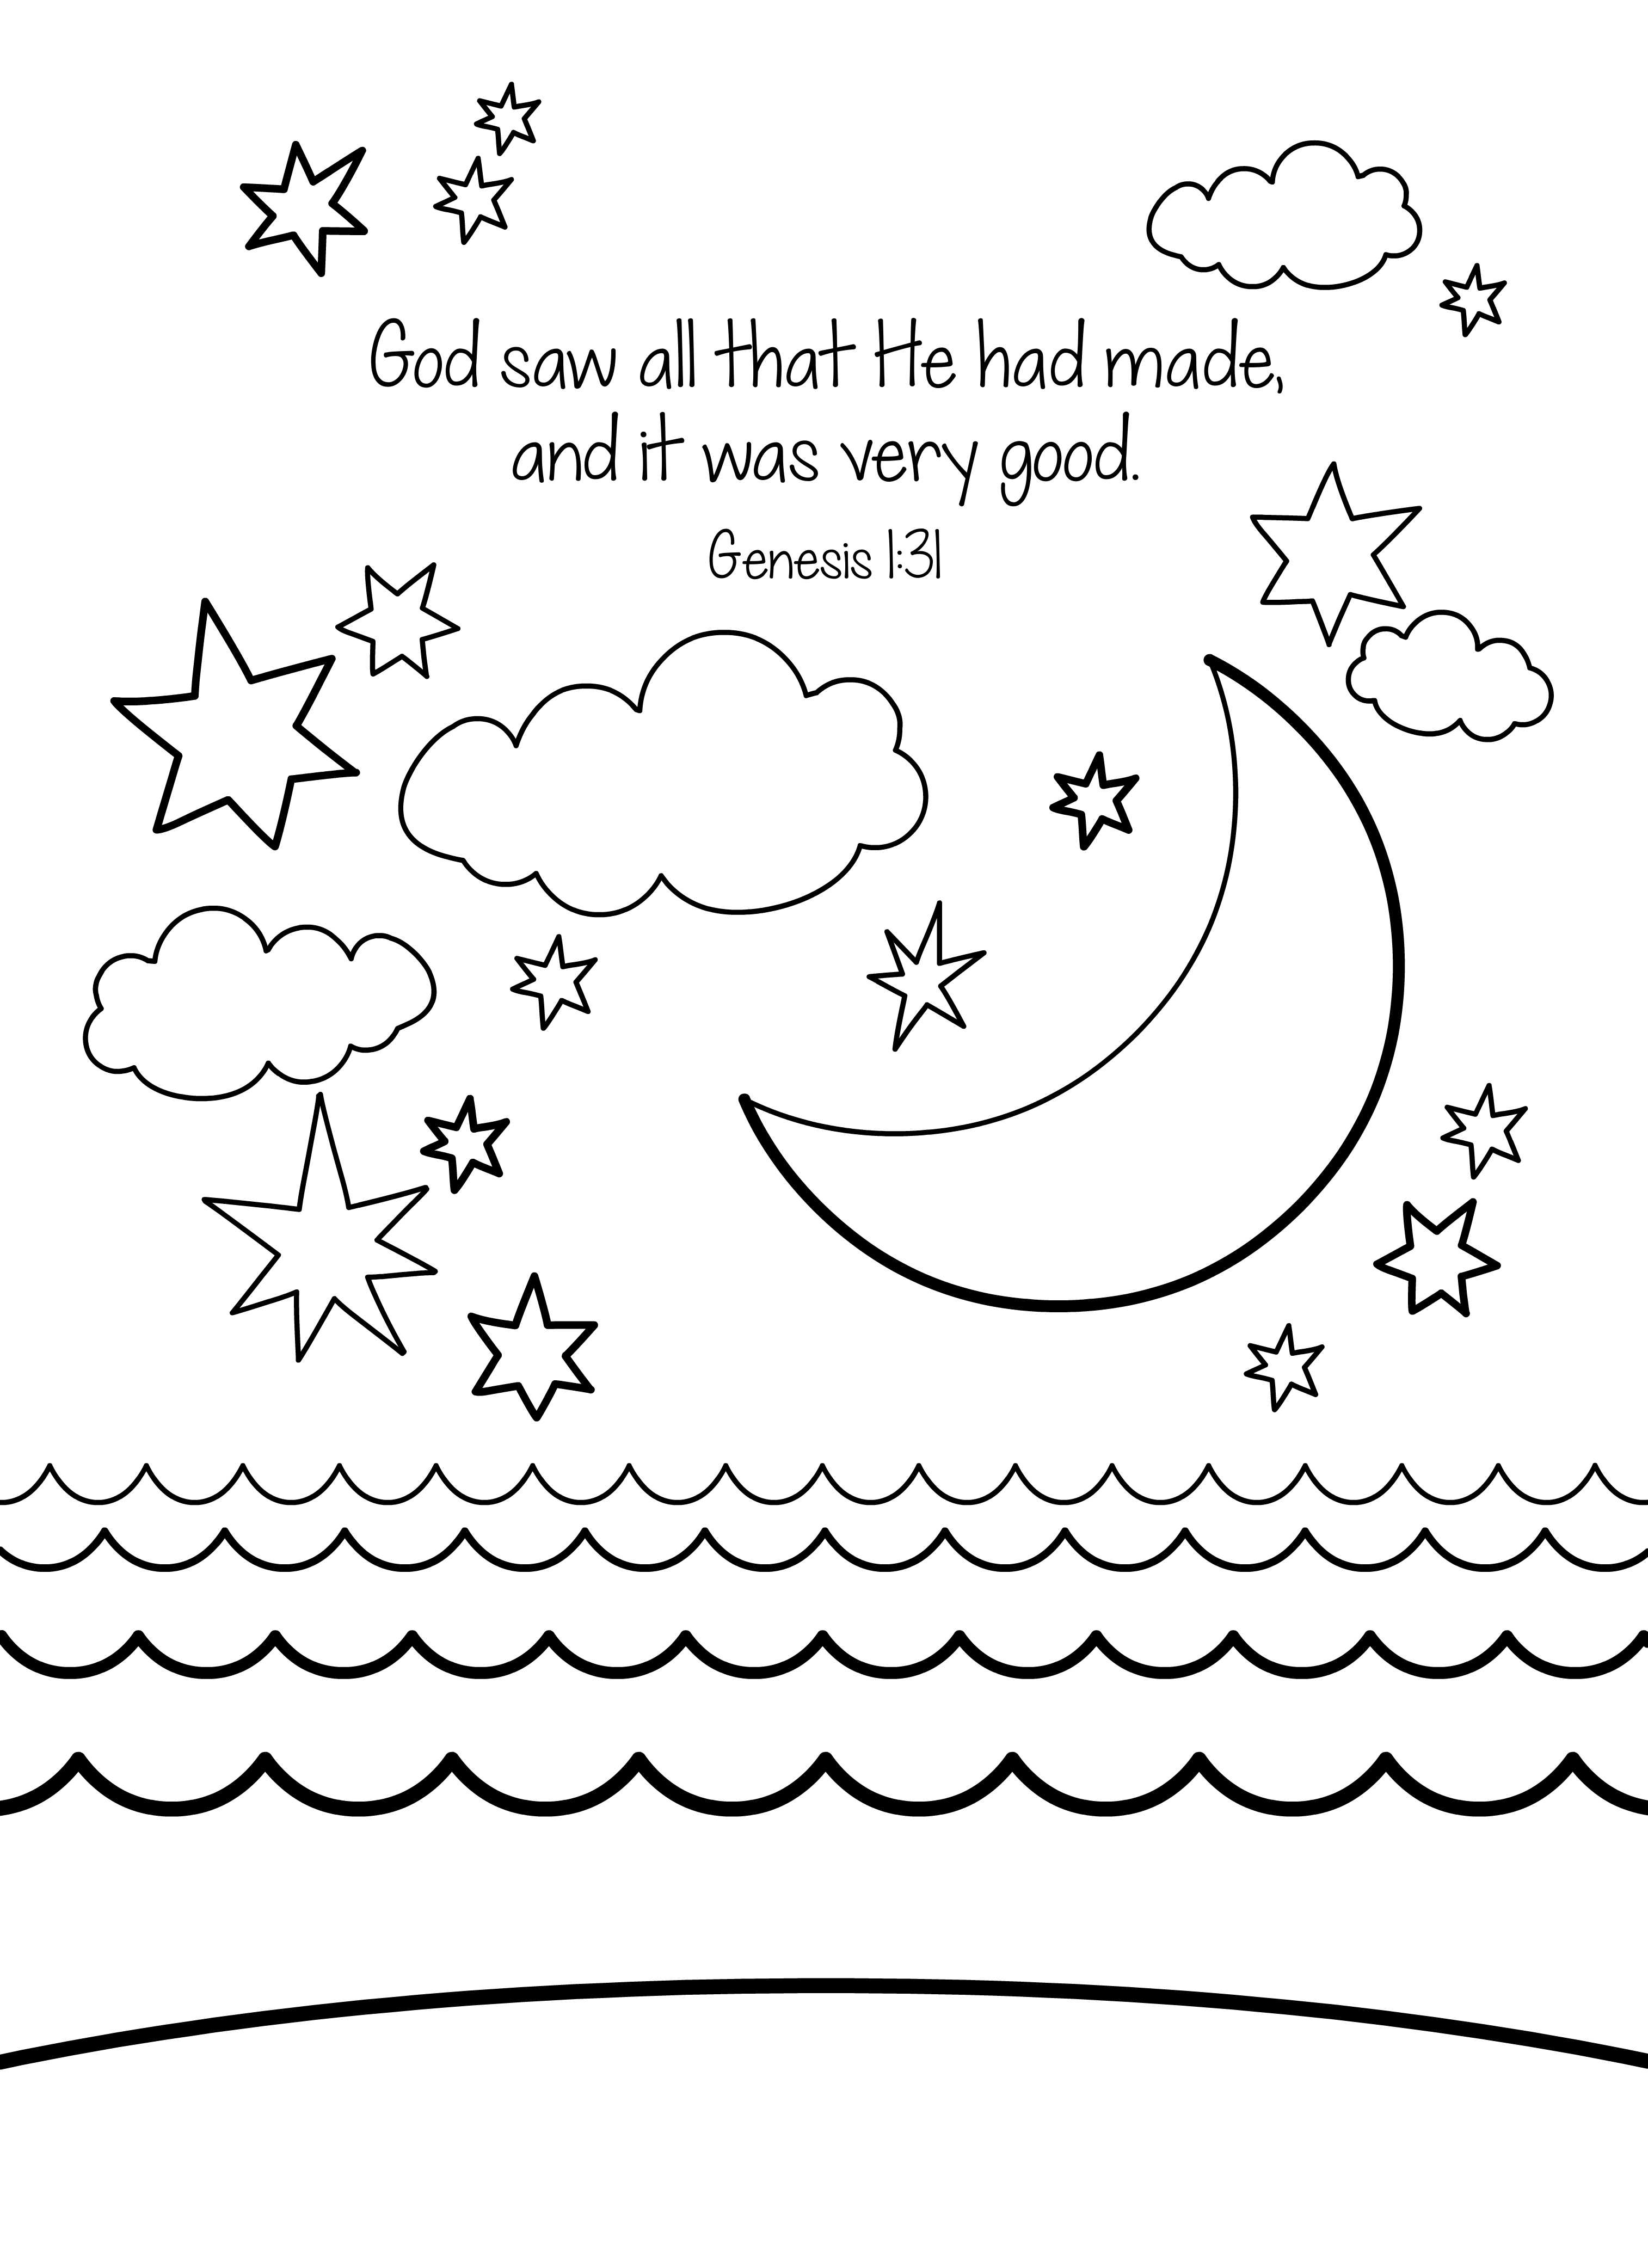 Bible Memory Verse Coloring Sheet | Creation | Free Children's Videos ...